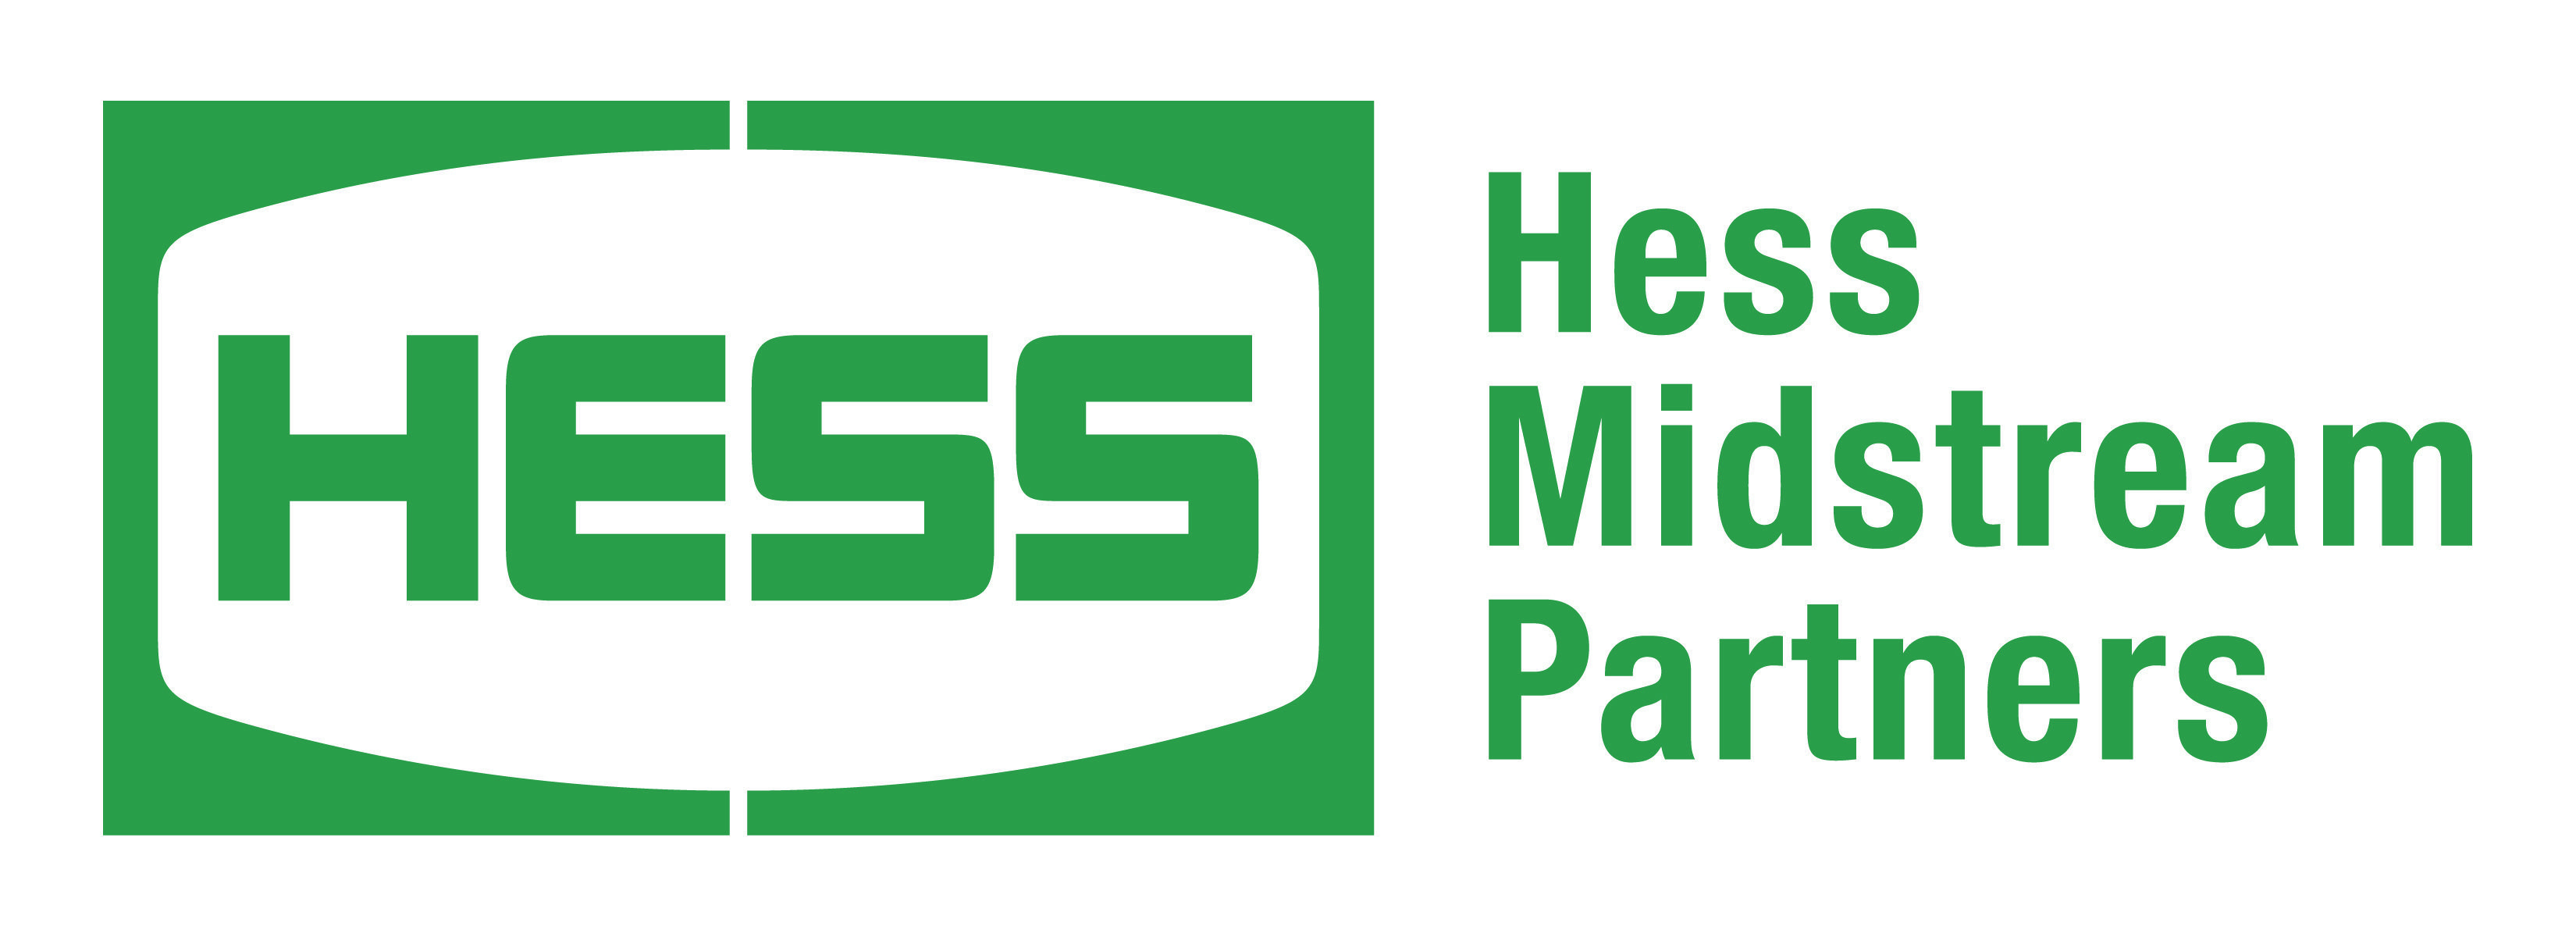 Hess Logo - Operations - Hess Midstream Partners